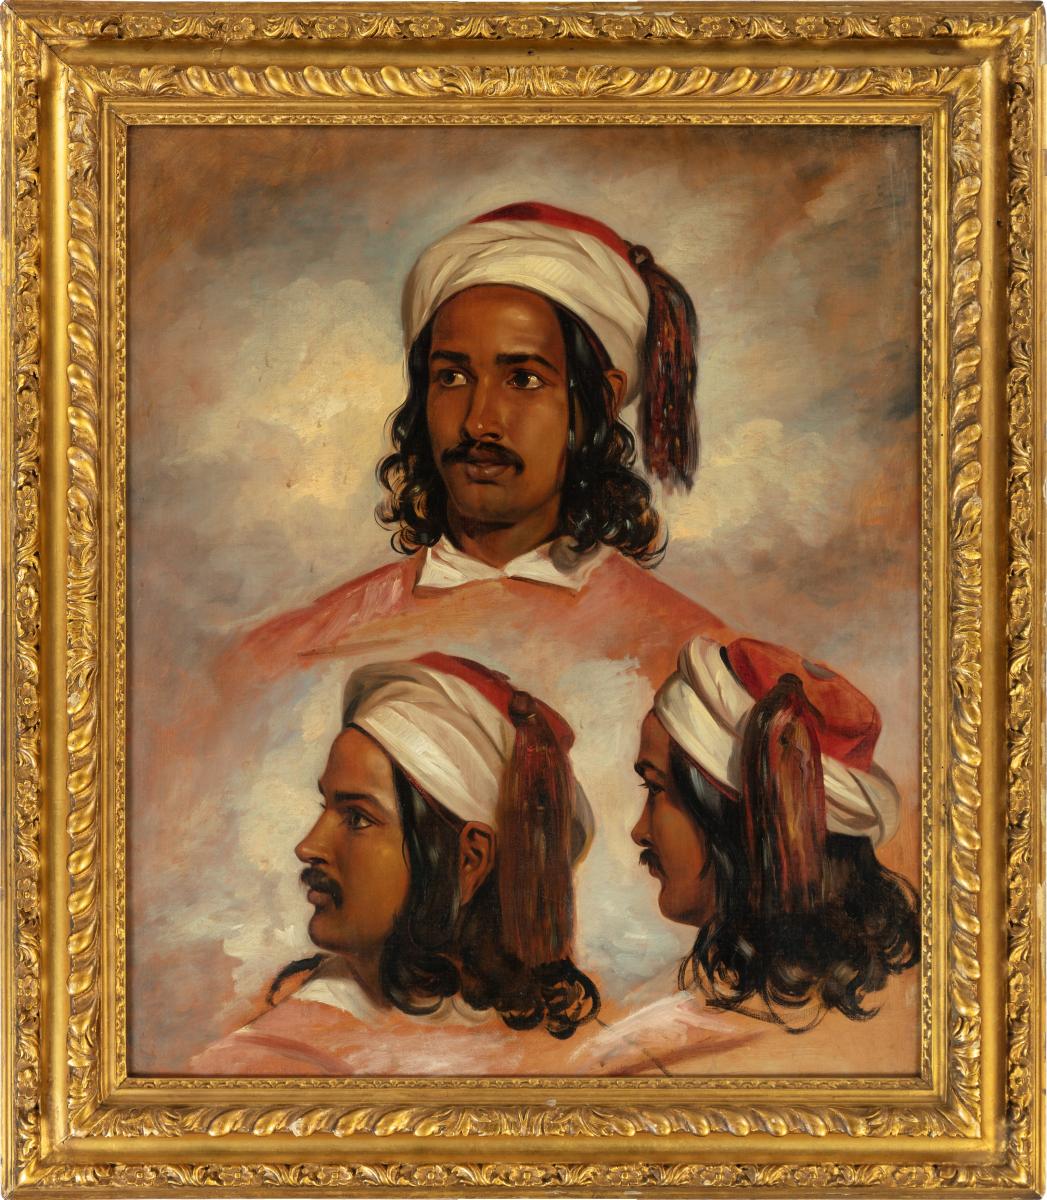 Portrait studies of an Arab by William Etty